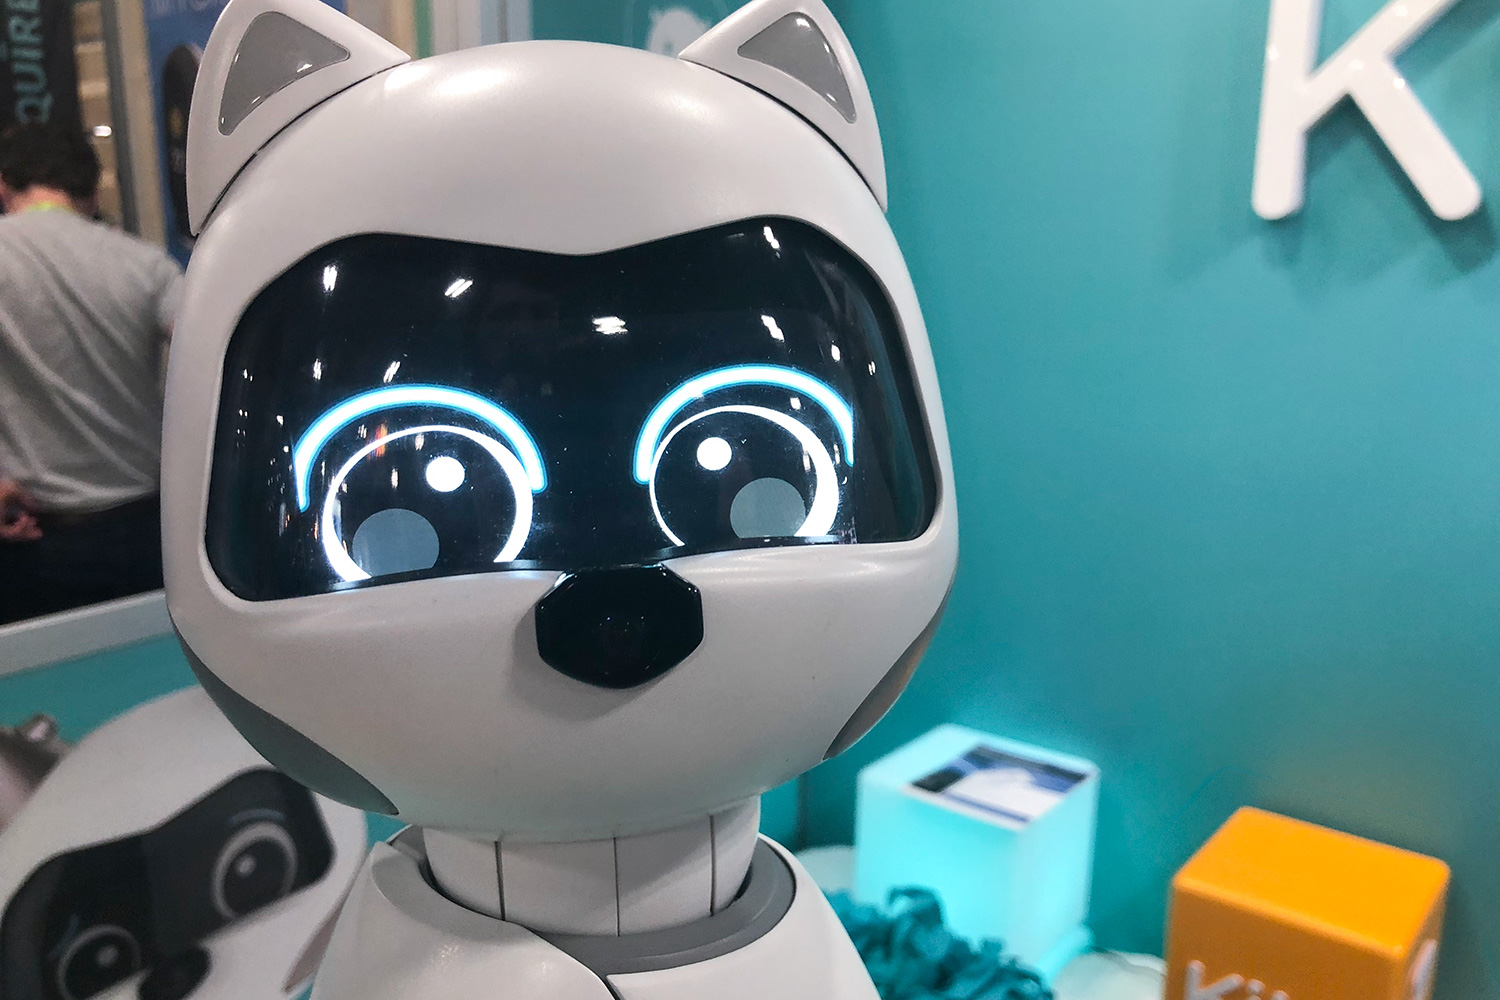 cutest companion robots ces 2019 zoetic kiki staring